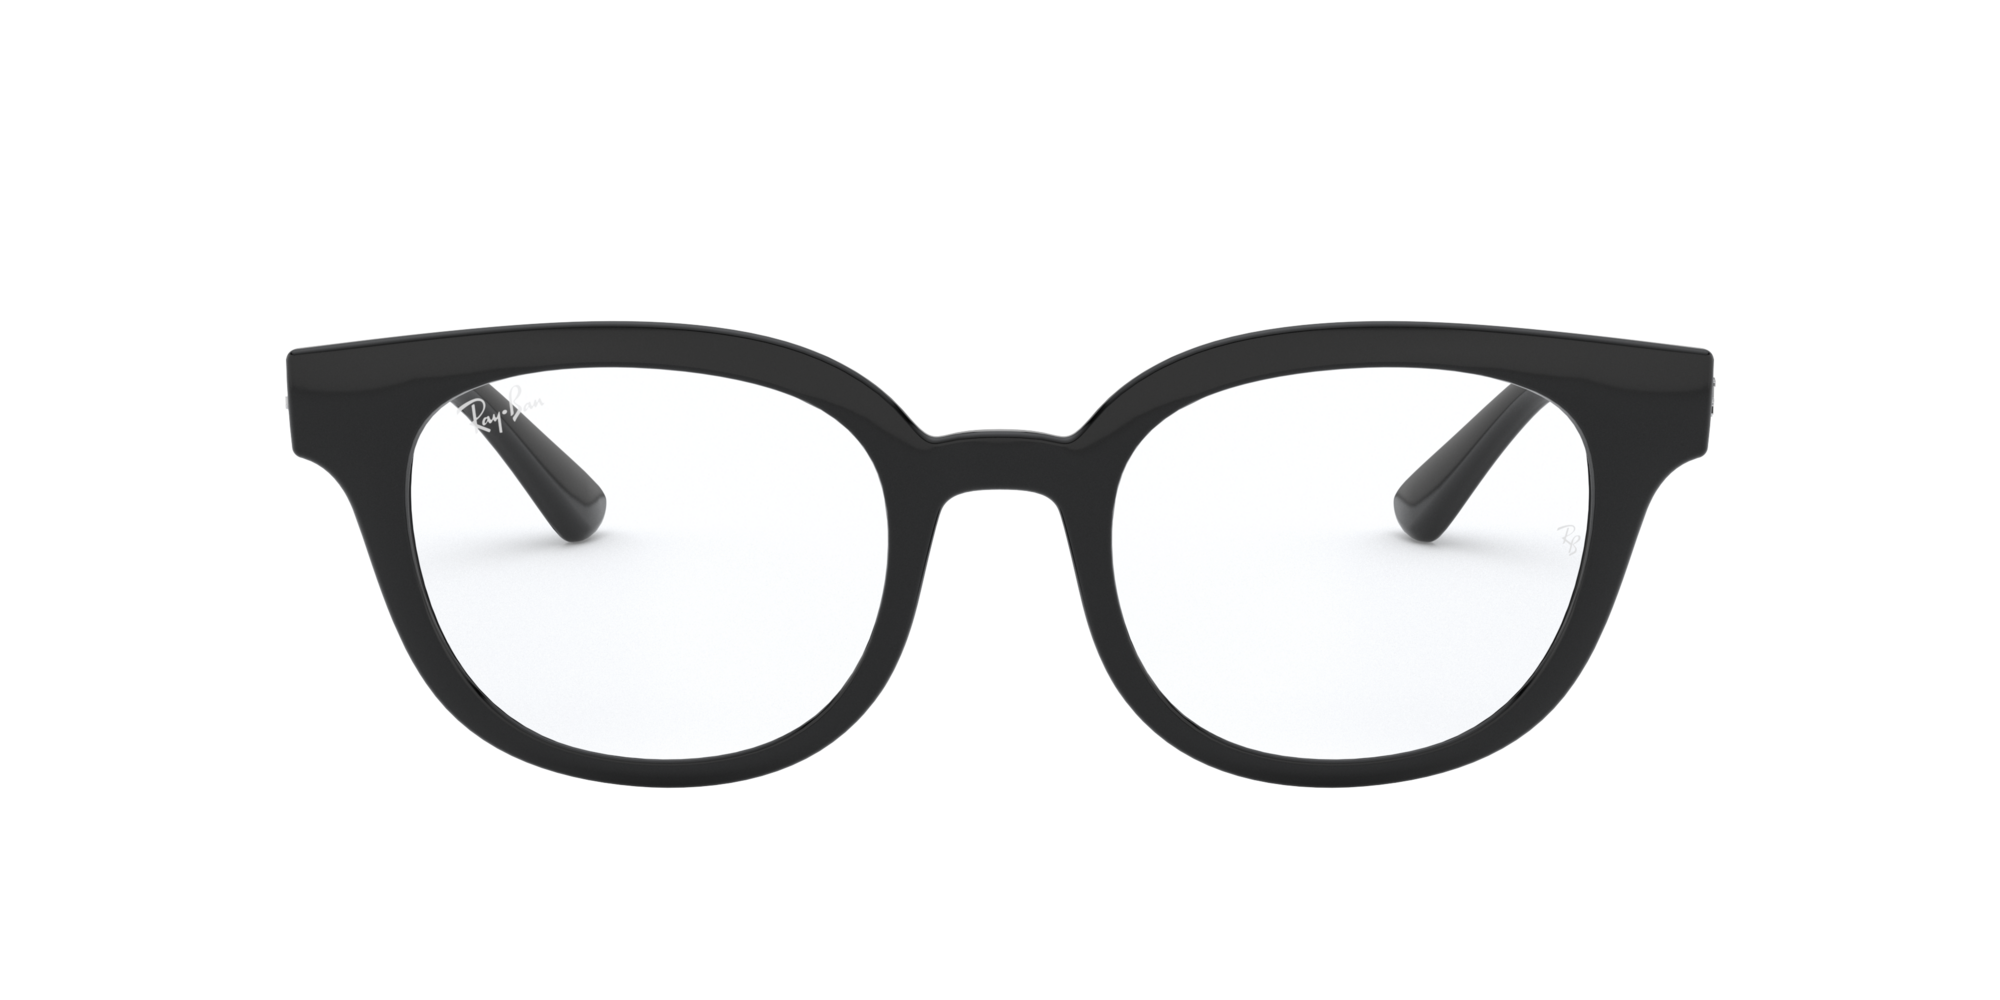 Ray Ban 0rx4324v Glasses In Black Target Optical